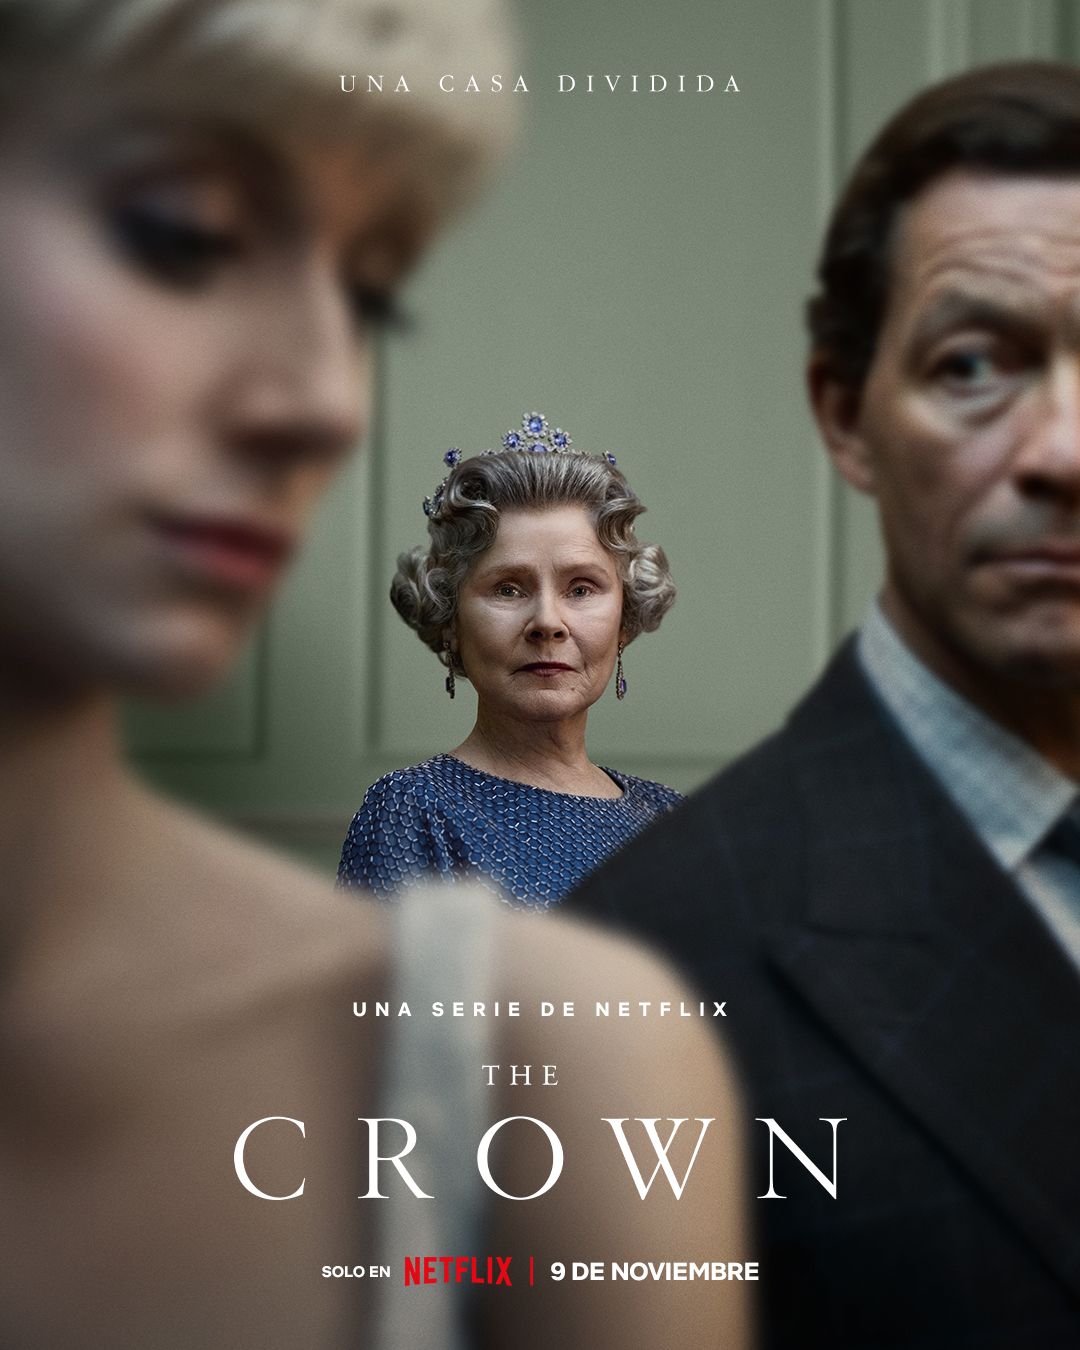 The Crown (5ª Temporada)